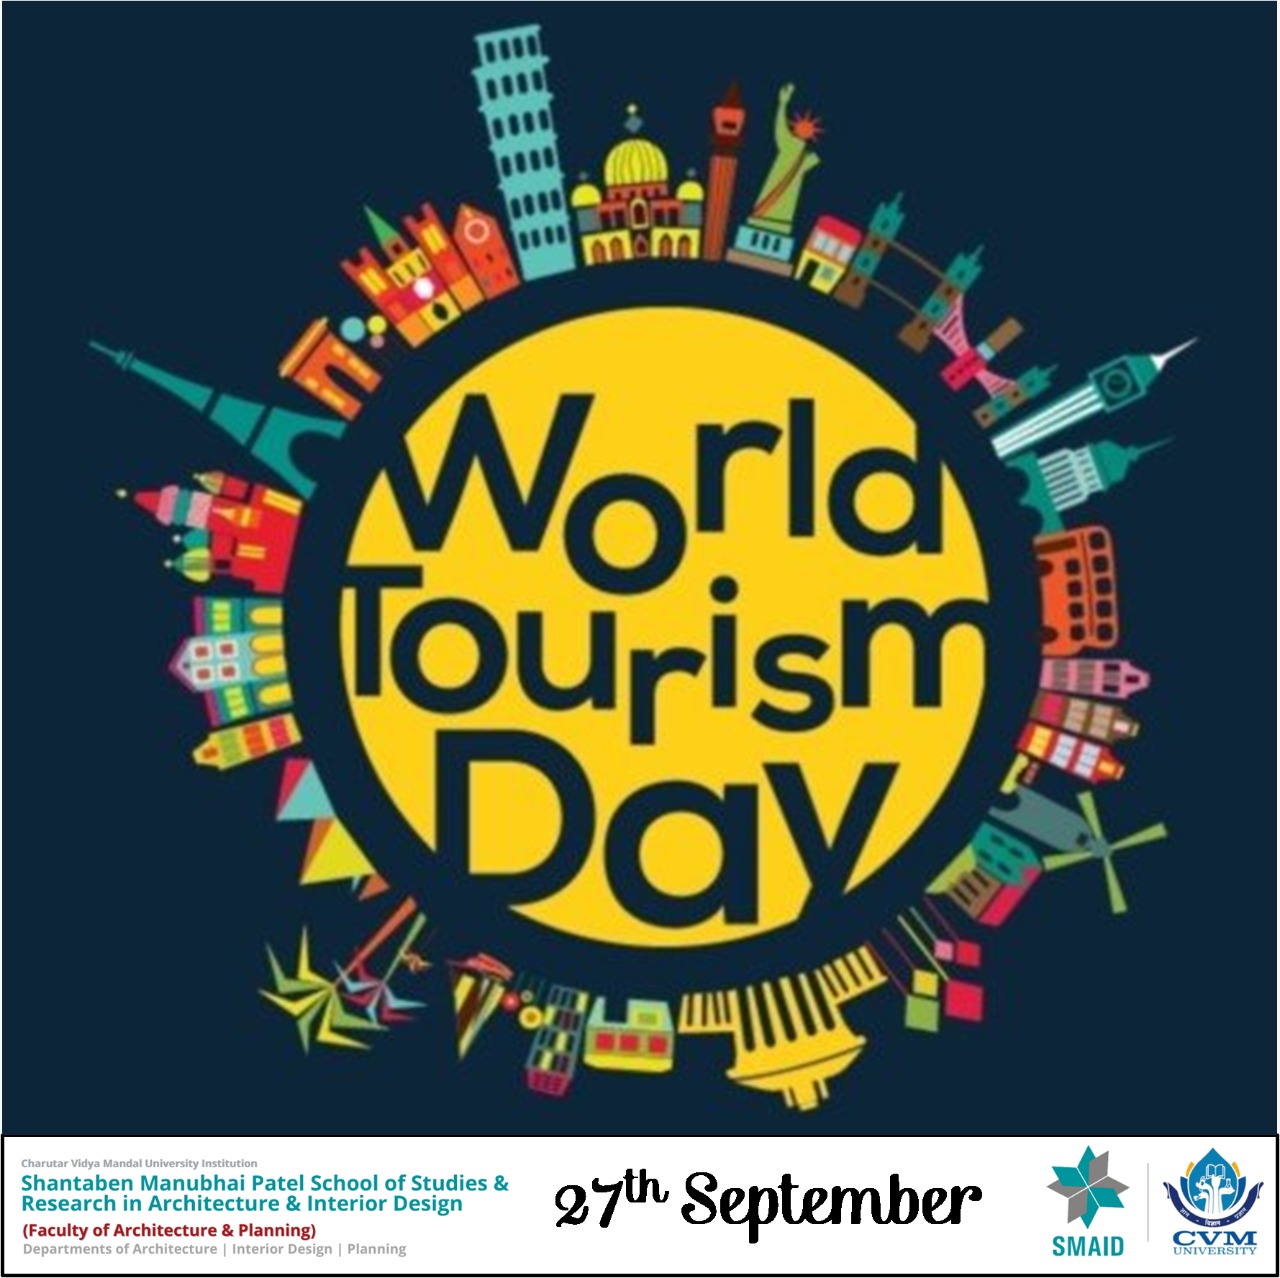 27th September_World Tourism Day